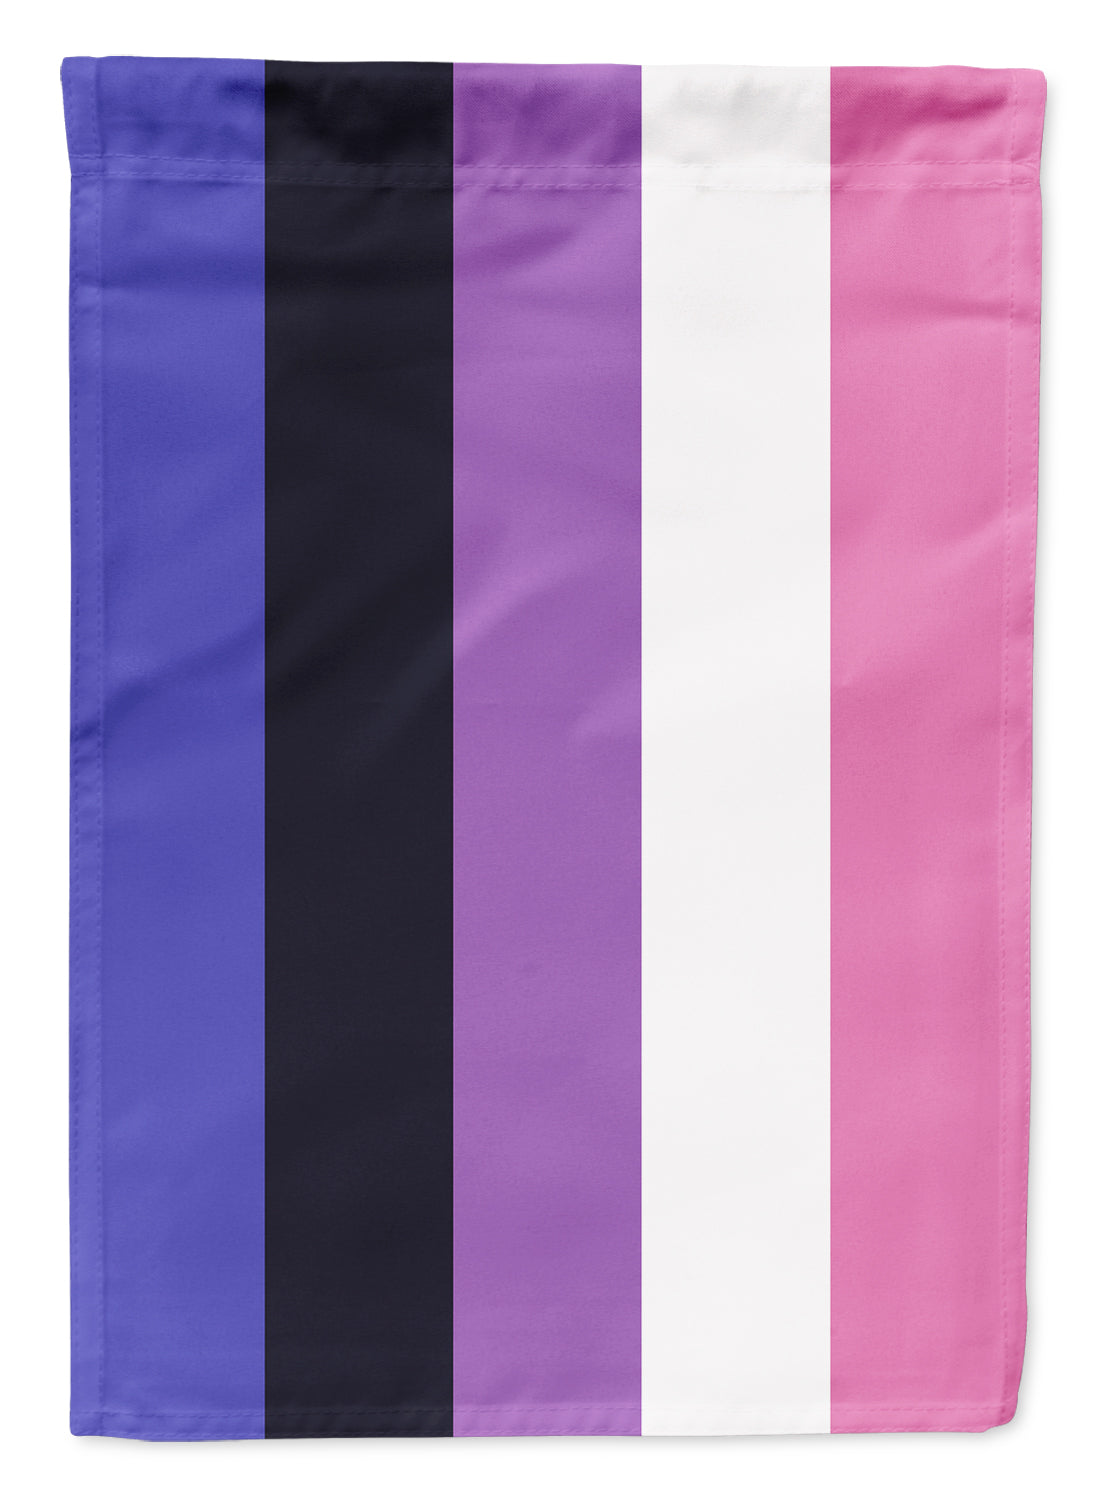 Genderfluid Pride Flag Garden Size